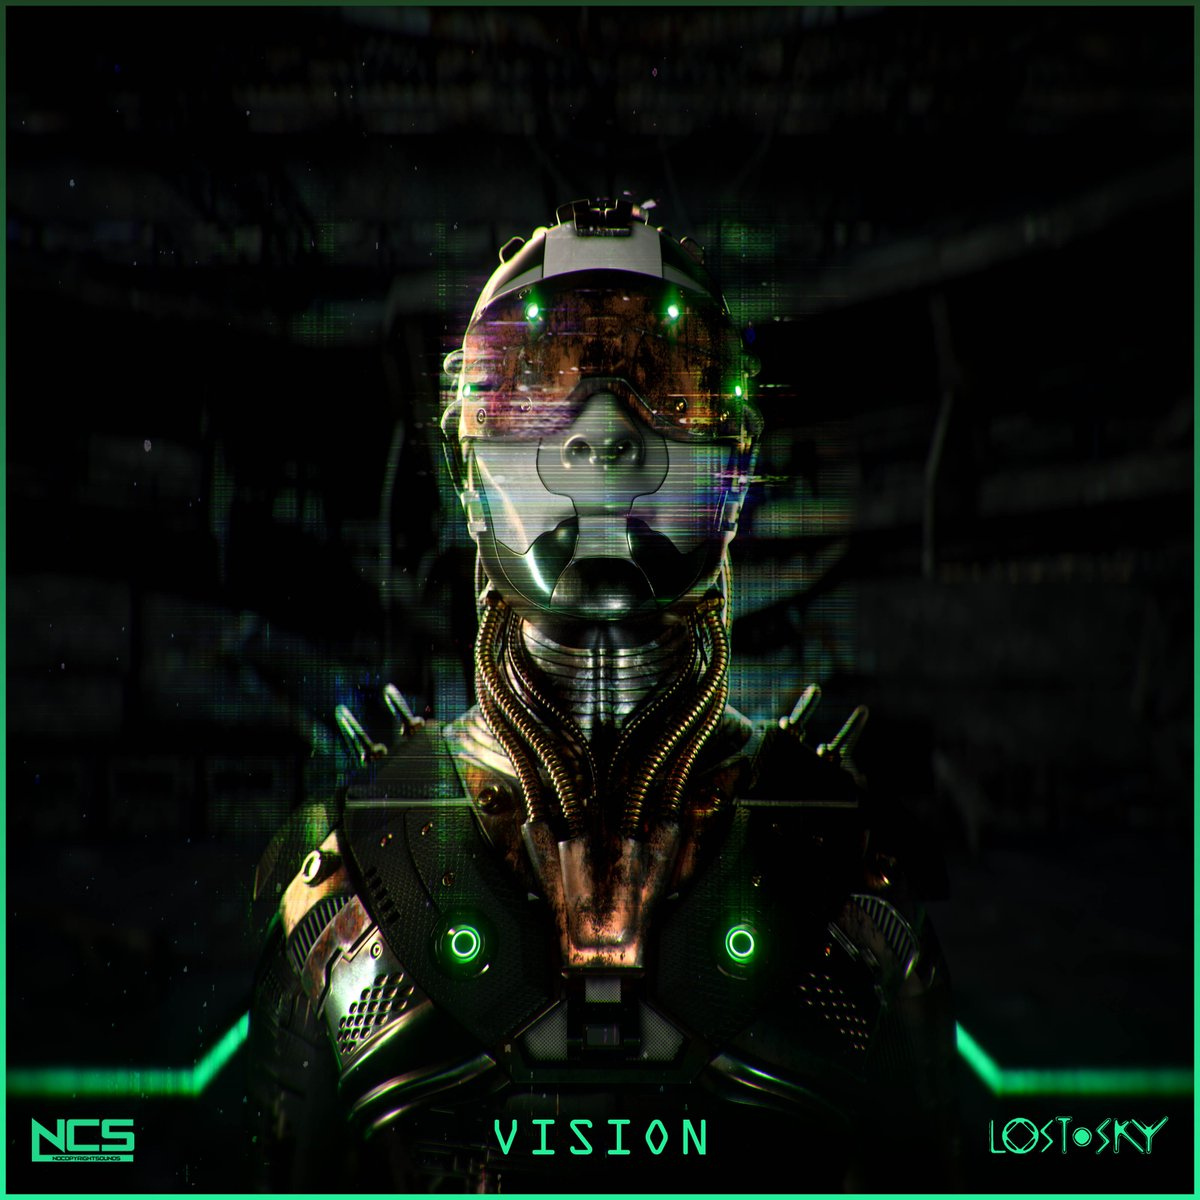 Lost Sky Vision cover artwork